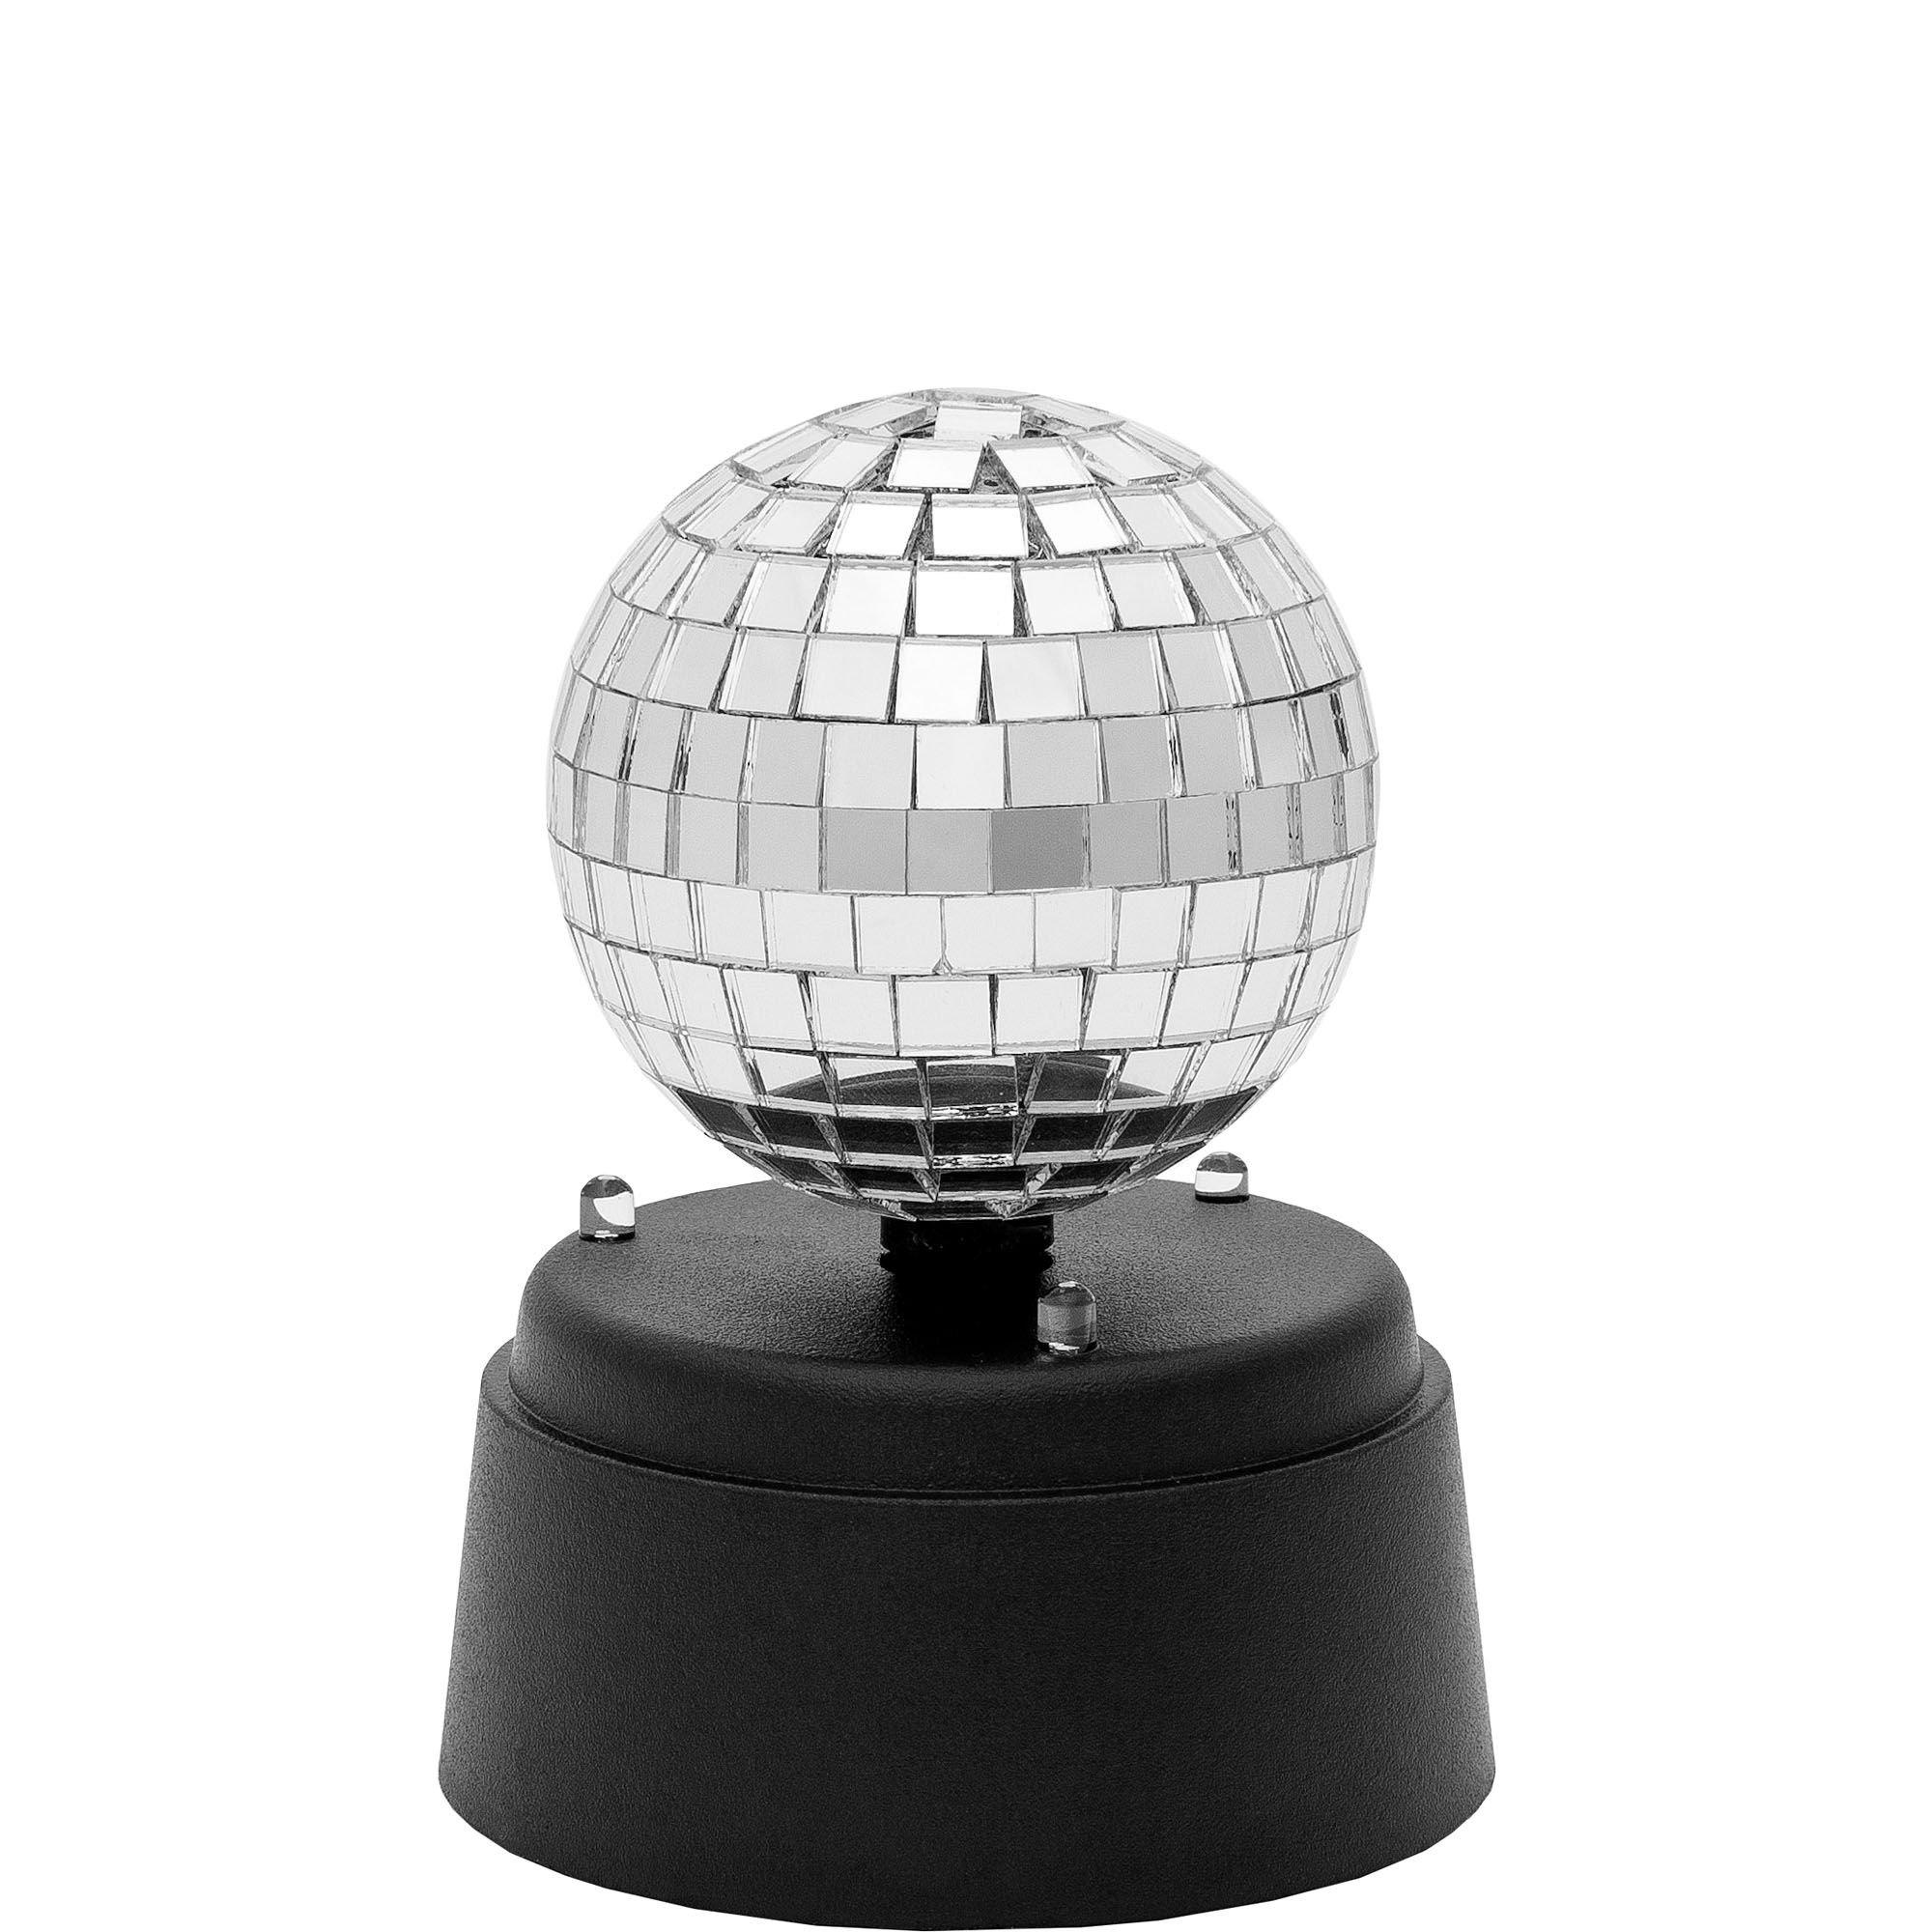 mini disco ball